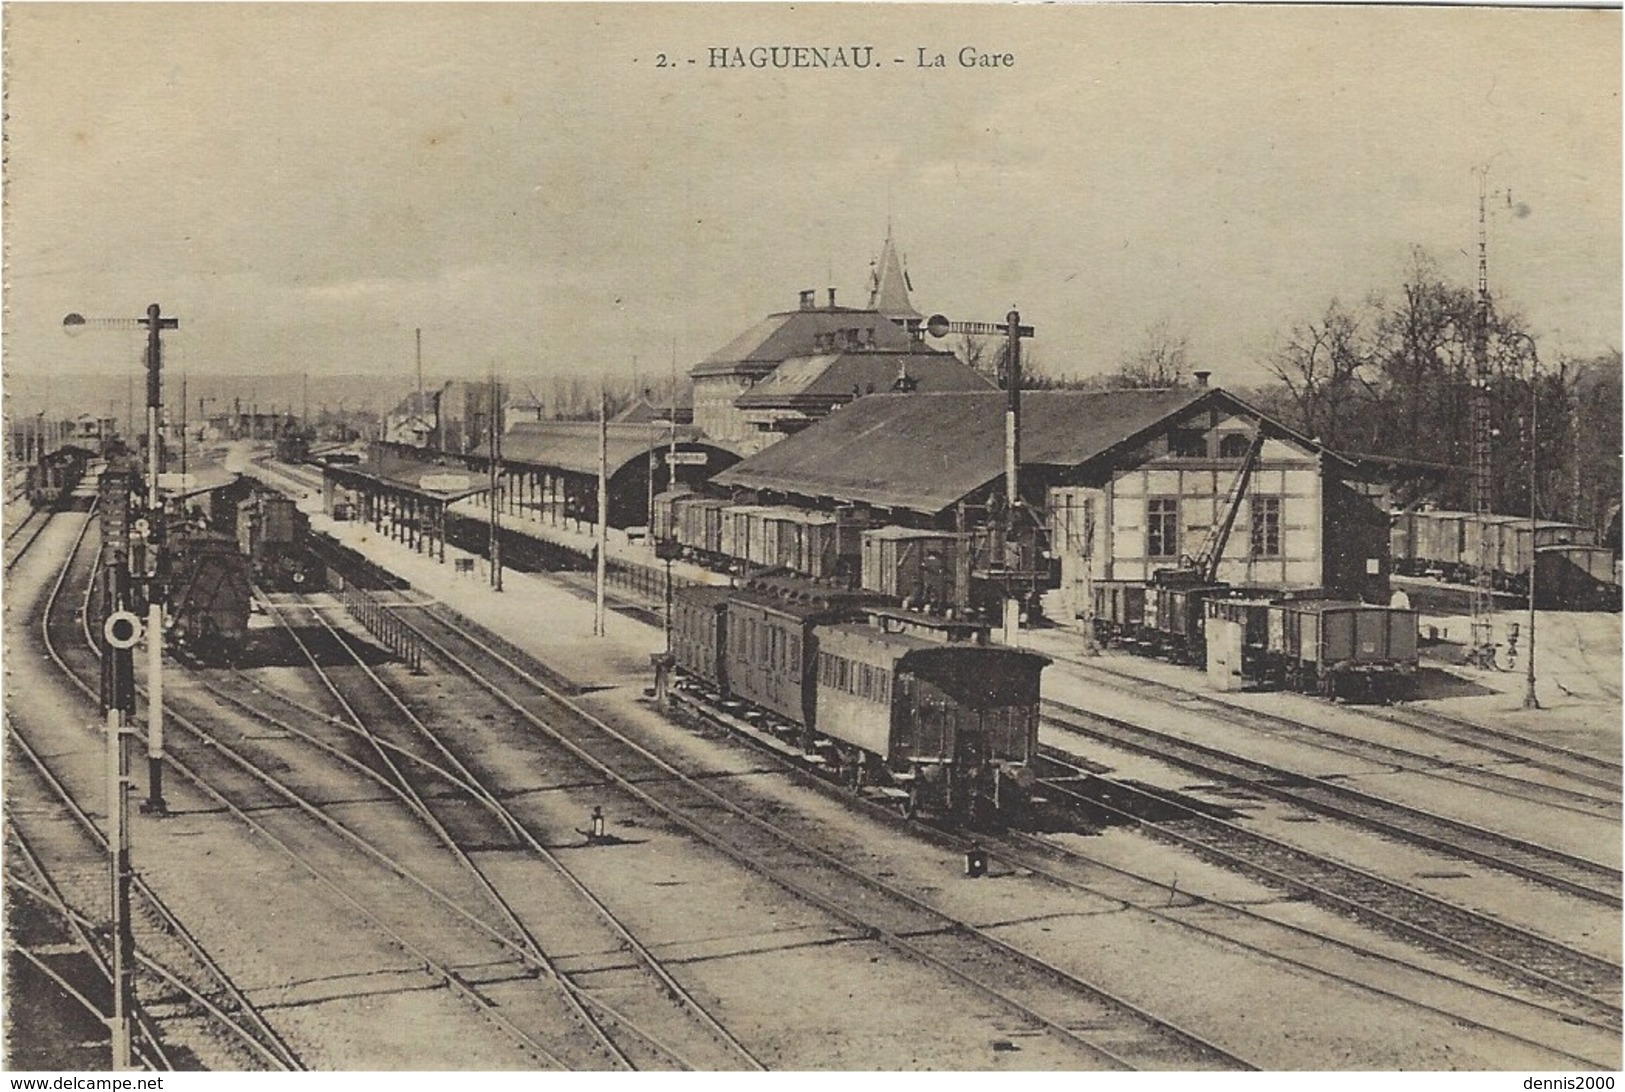 HAGUENAU (67) - La GAre - TRAIN - ED. Ch. Bergeret, Strasbourg - Haguenau